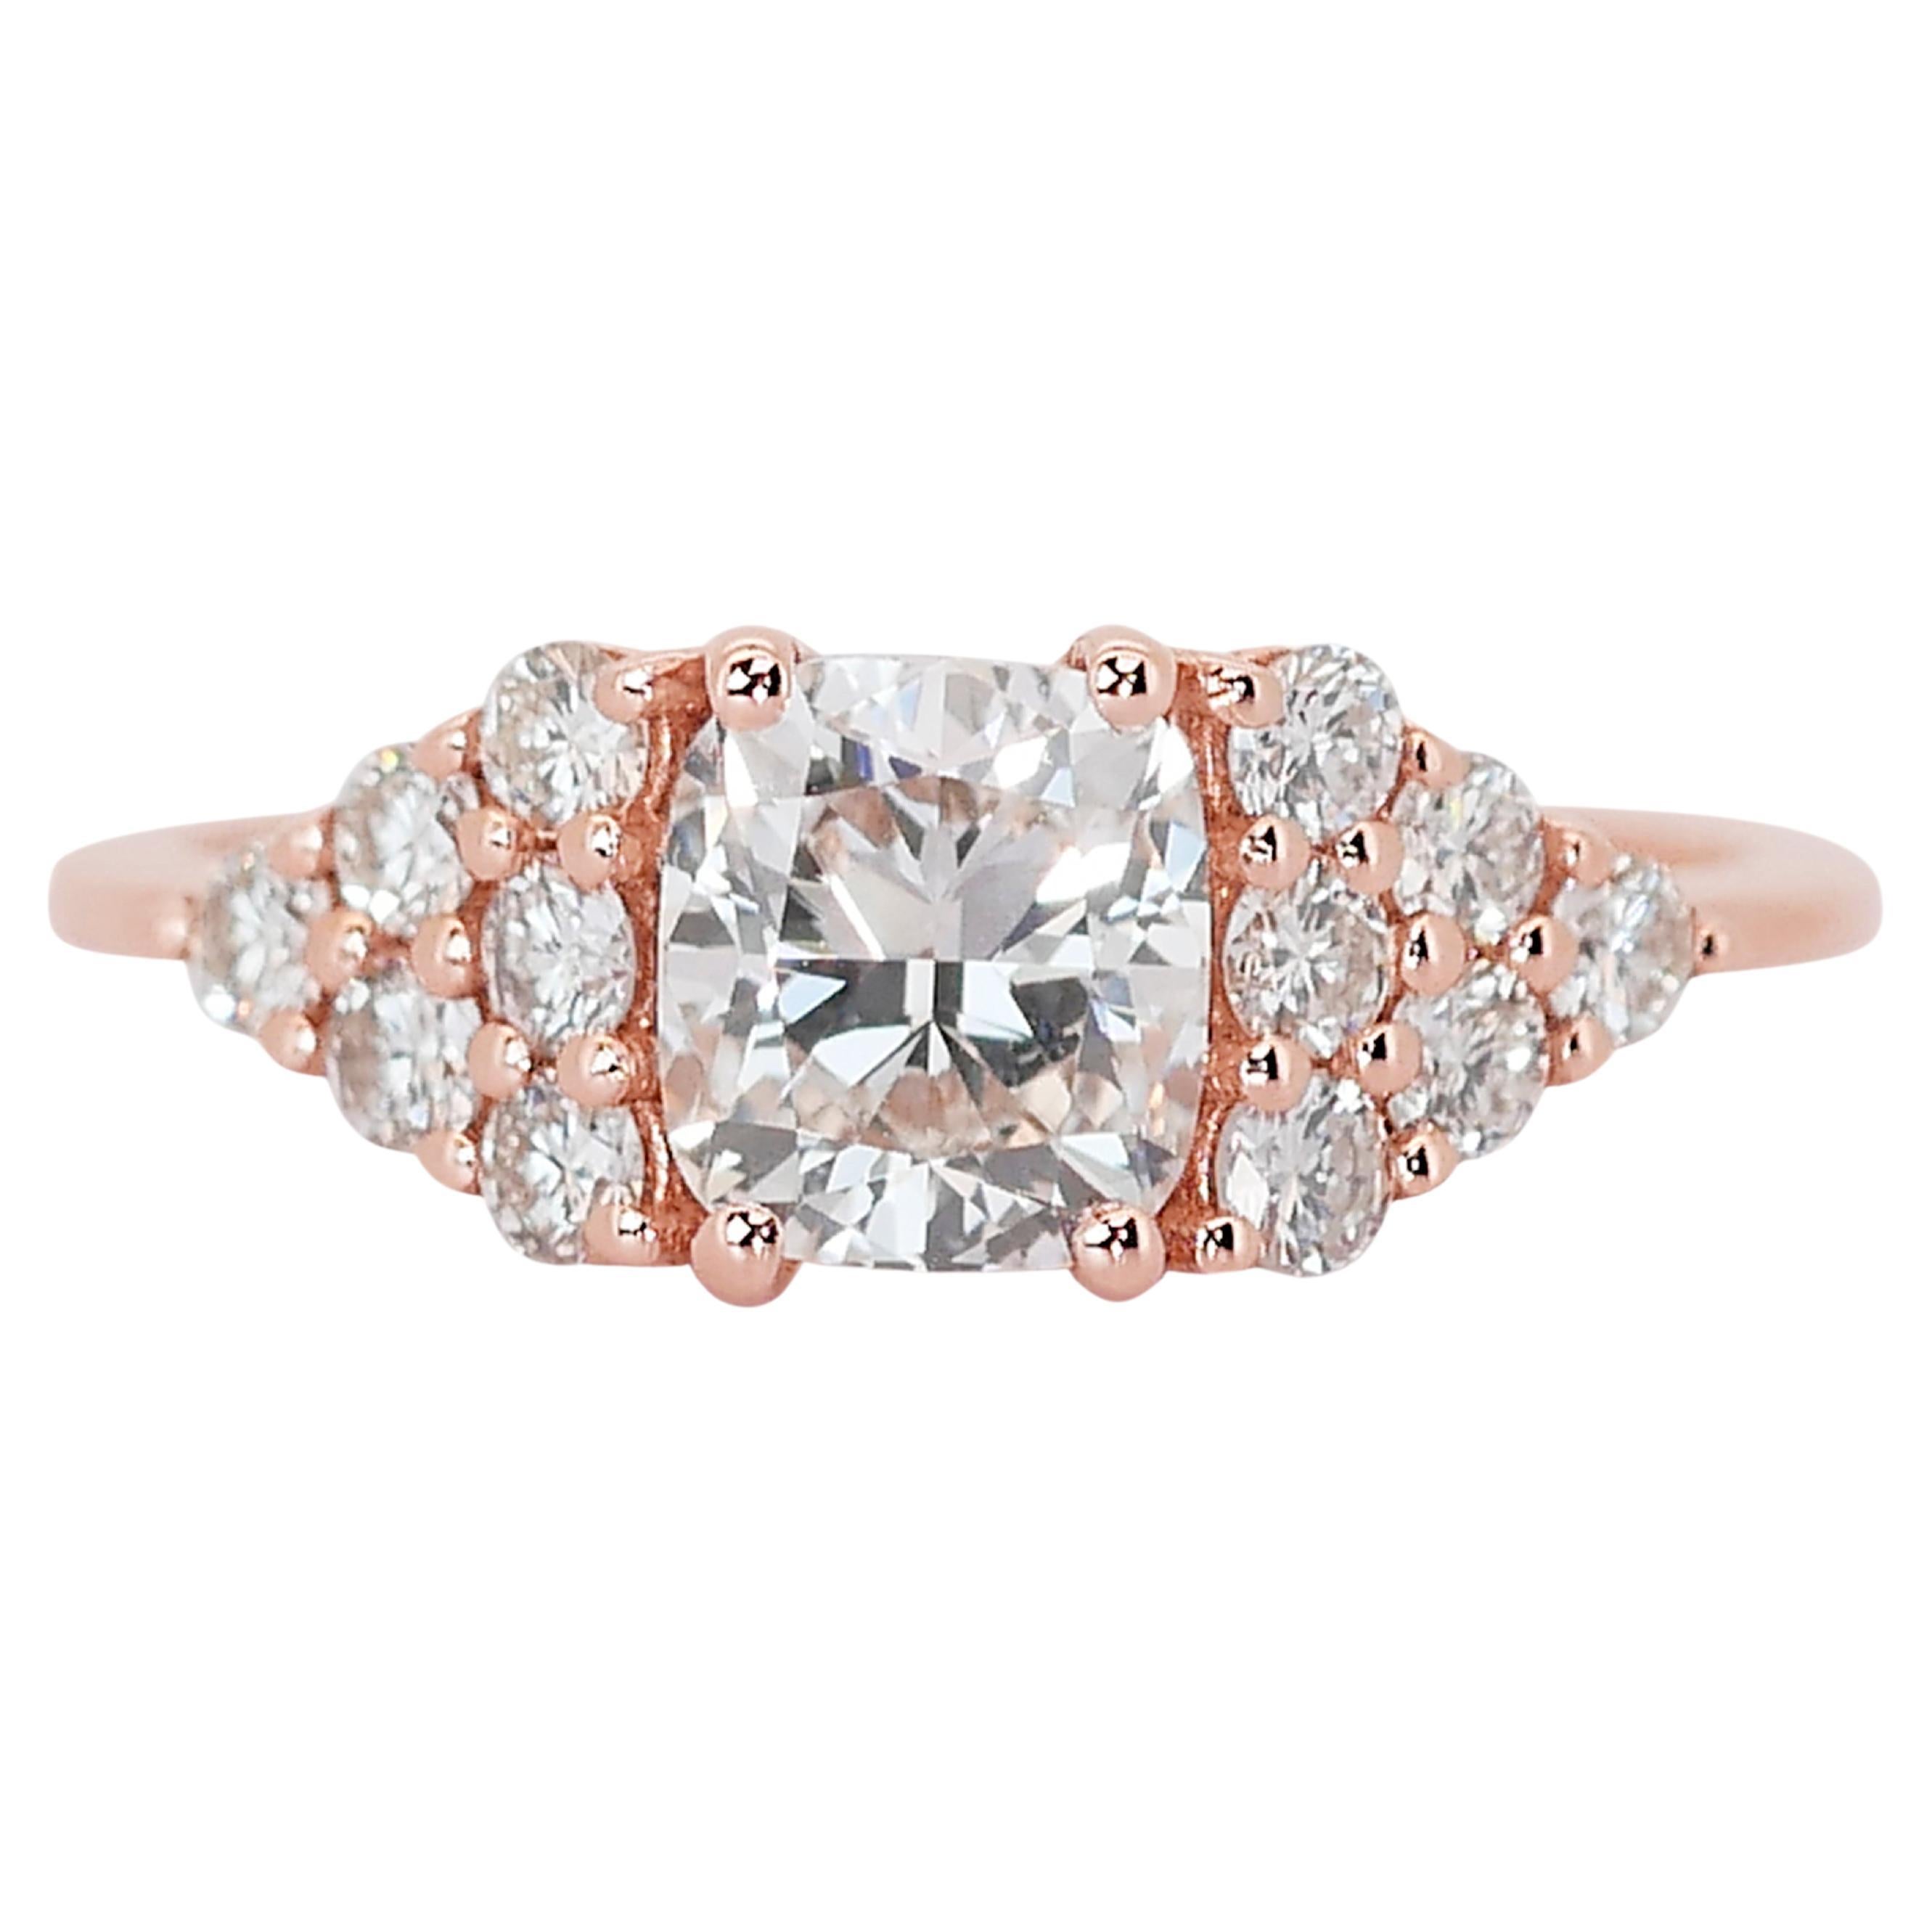 Schöner 1,65ct Diamanten Pave Ring in 14k Rose Gold - IGI zertifiziert